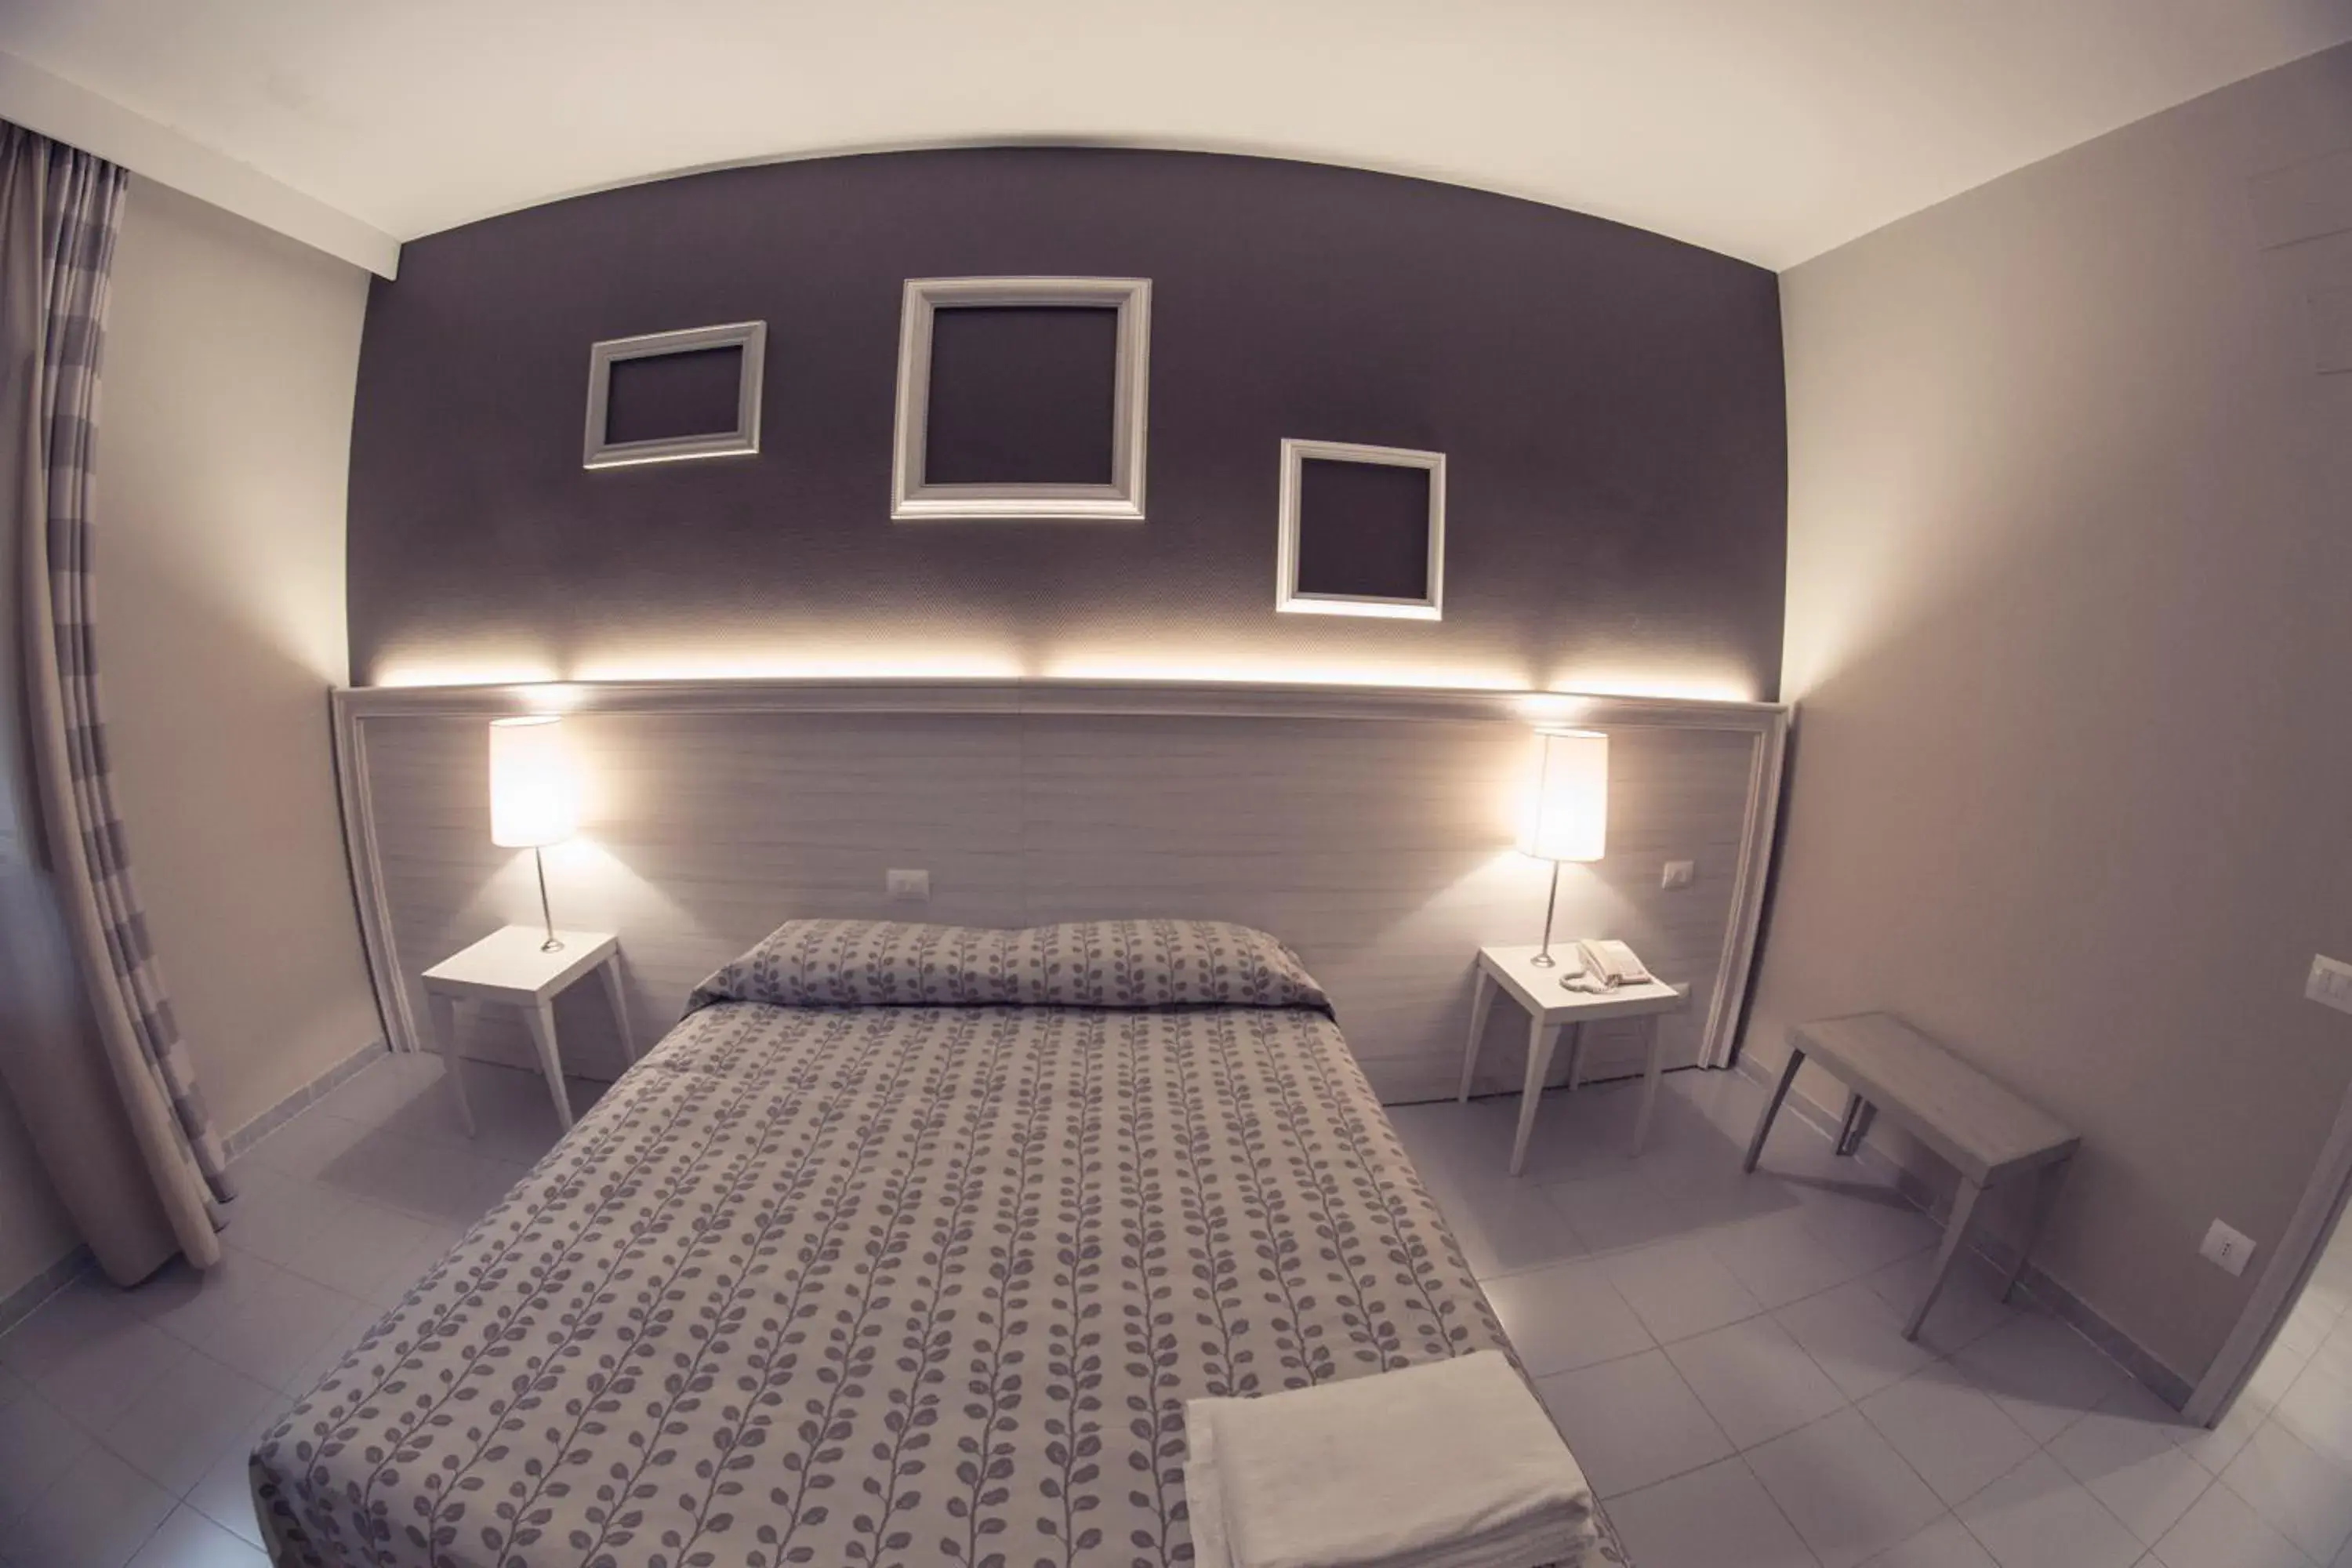 Bedroom, Room Photo in Hotel Degli Ulivi